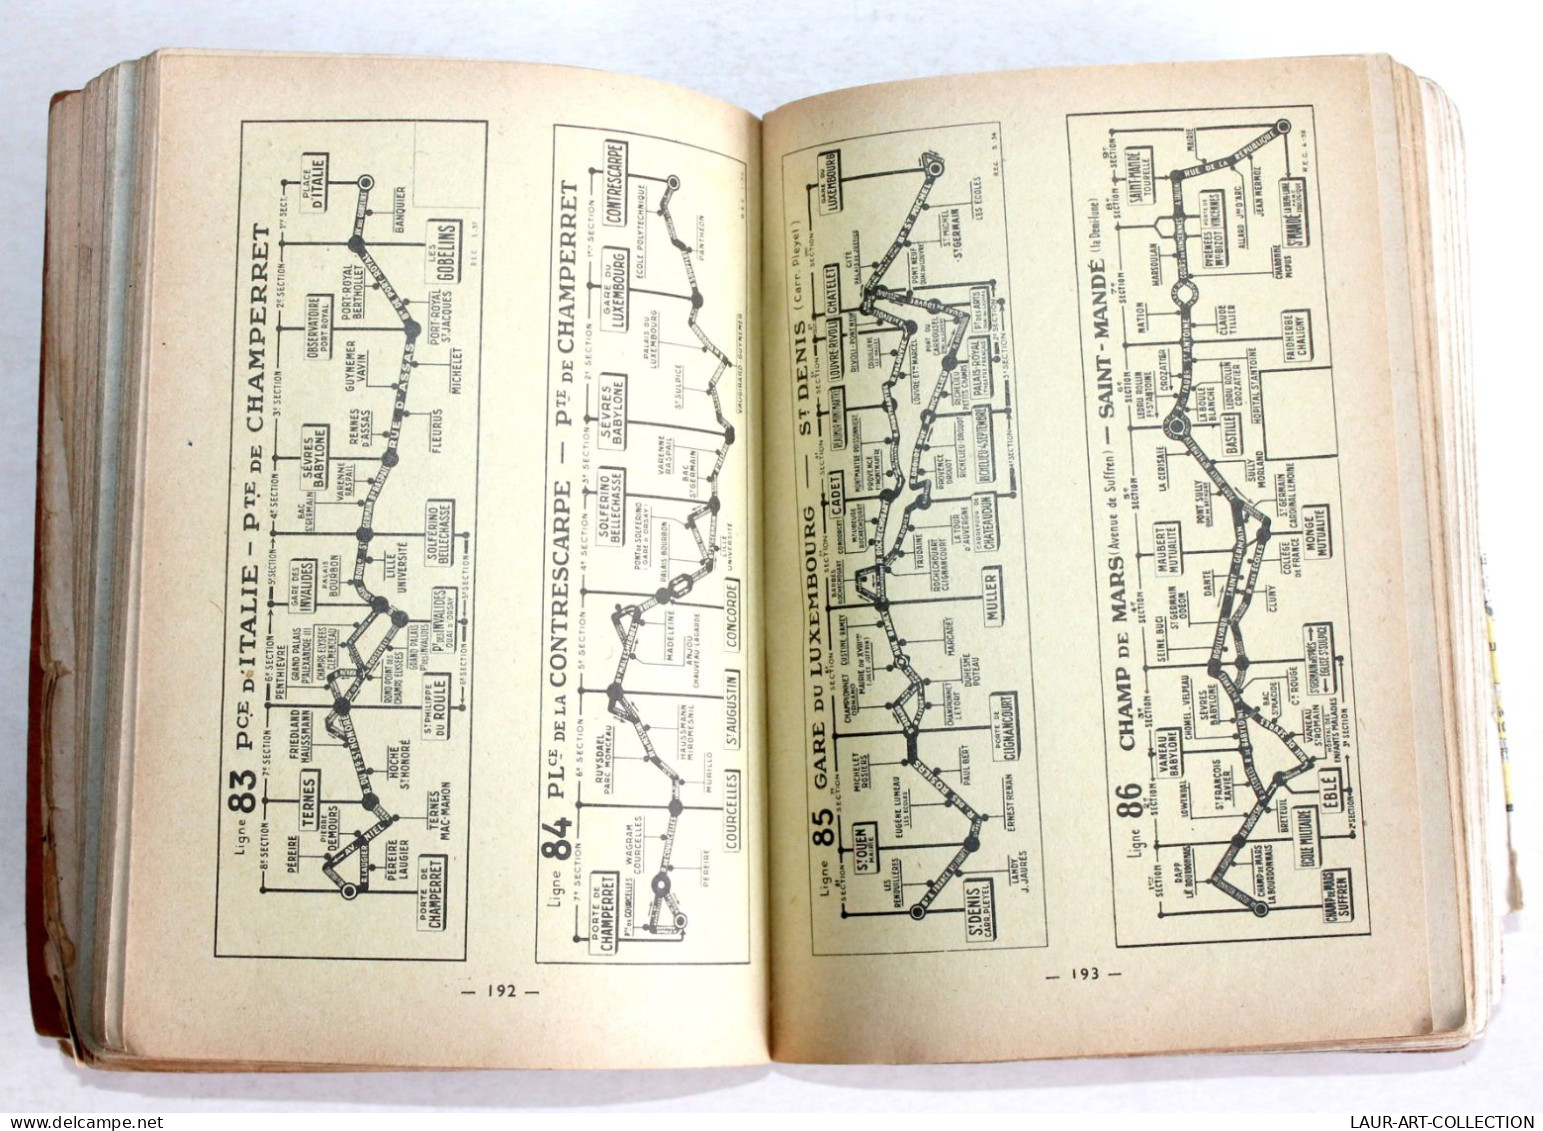 PARIS PLAN-GUIDE REPERTOIRE DES RUES, METRO-BUS 1959 CARTE TARIDE + PLAN ROUTIER  (R.17) - Maps/Atlas